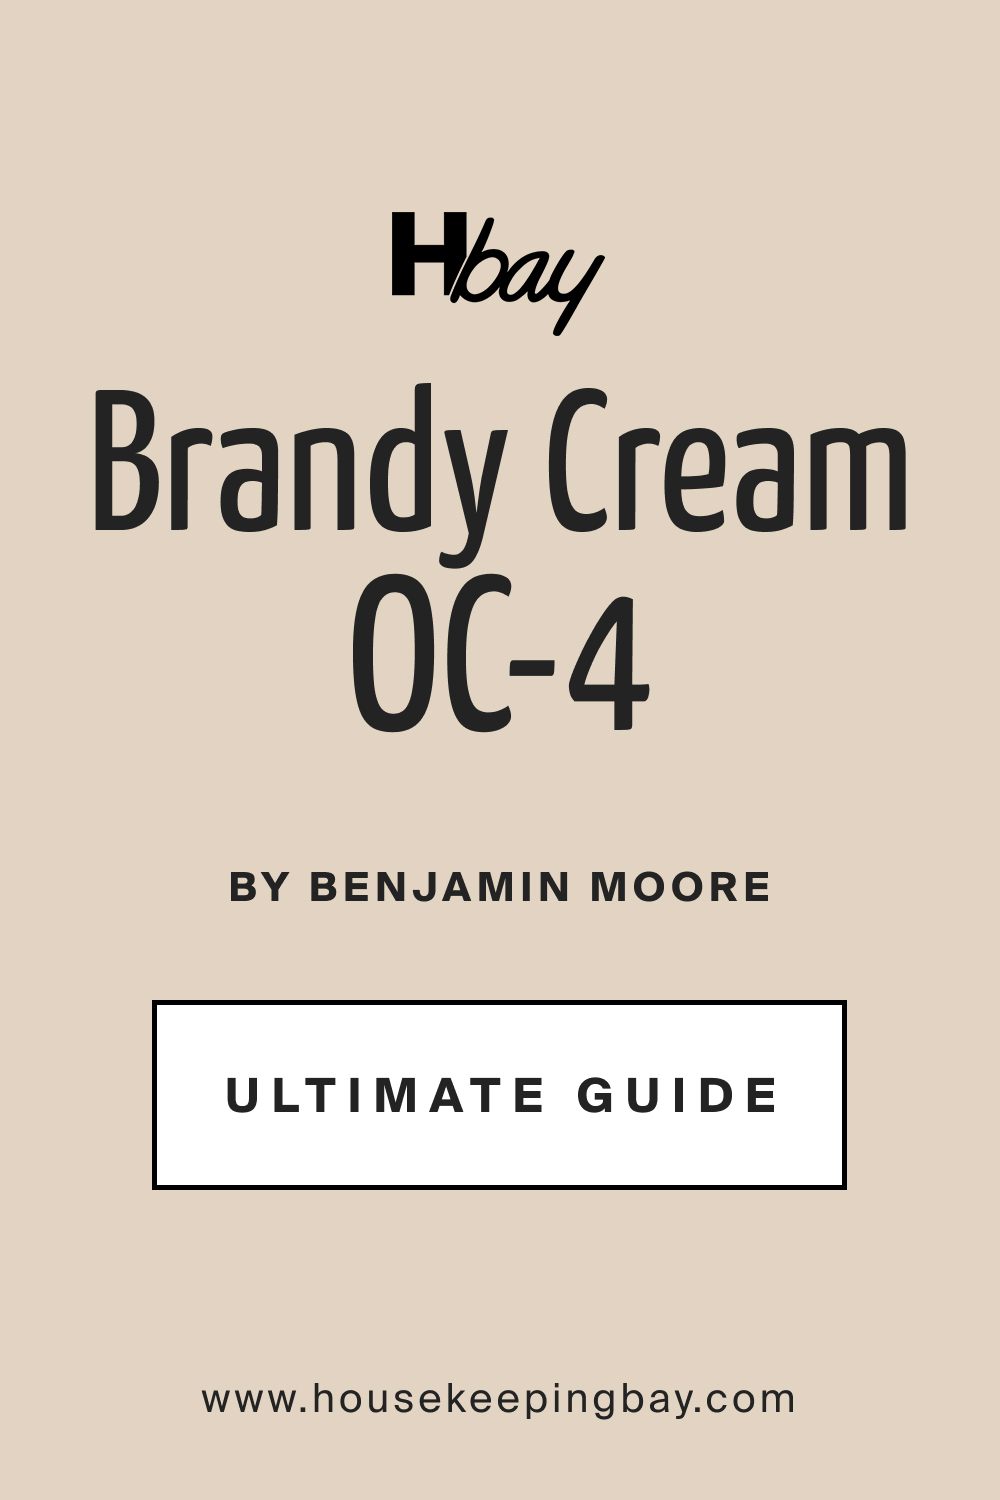 Brandy Cream OC 4 by Benjamin Moore Ultimate Guide